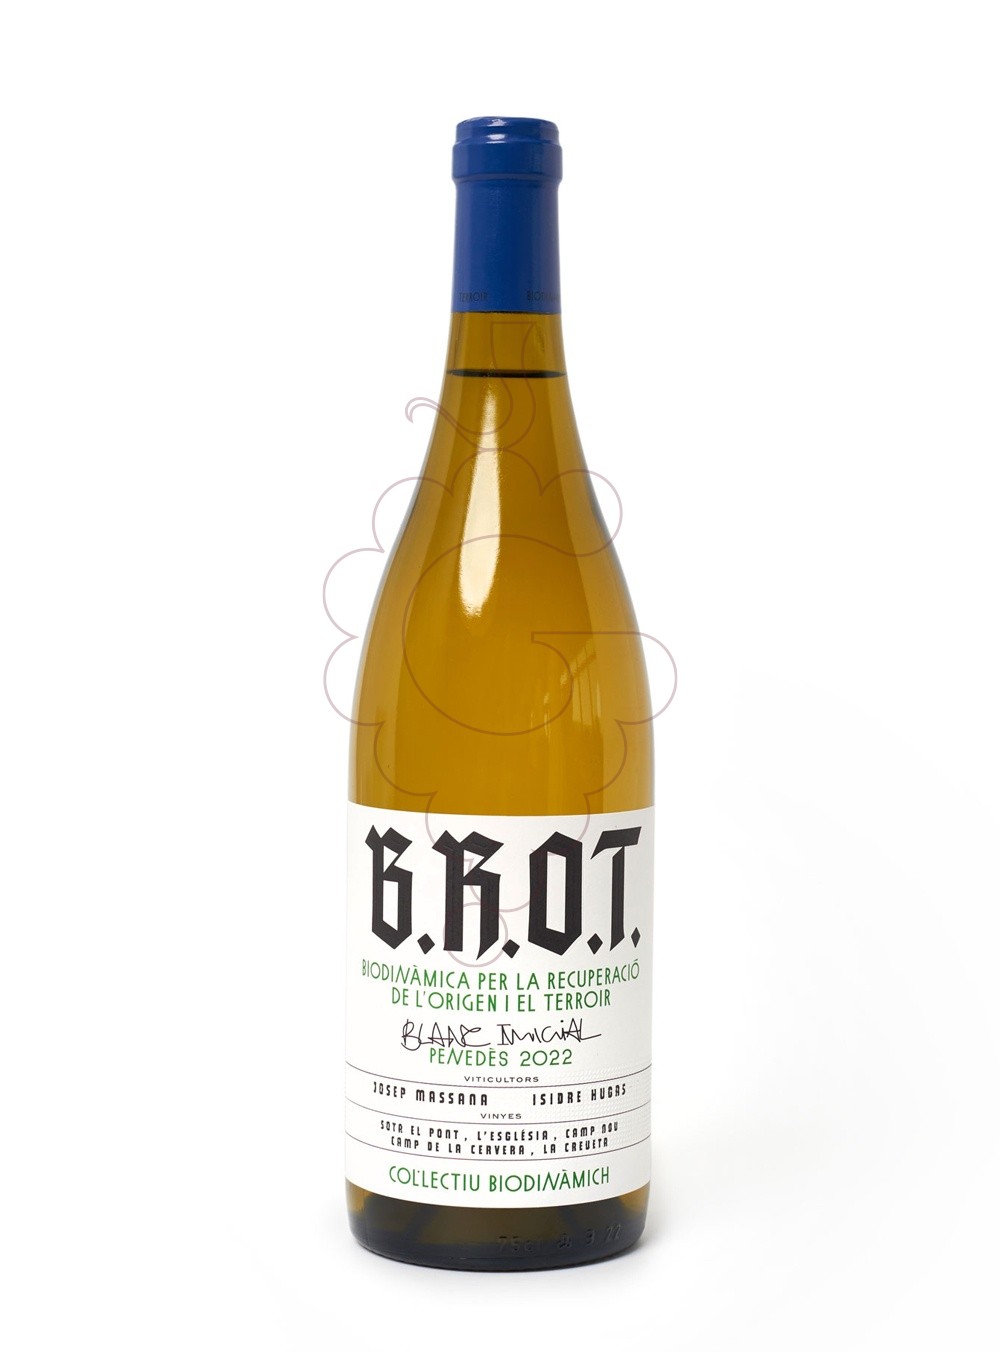 Photo B.R.O.T. Blanc Inicial white wine